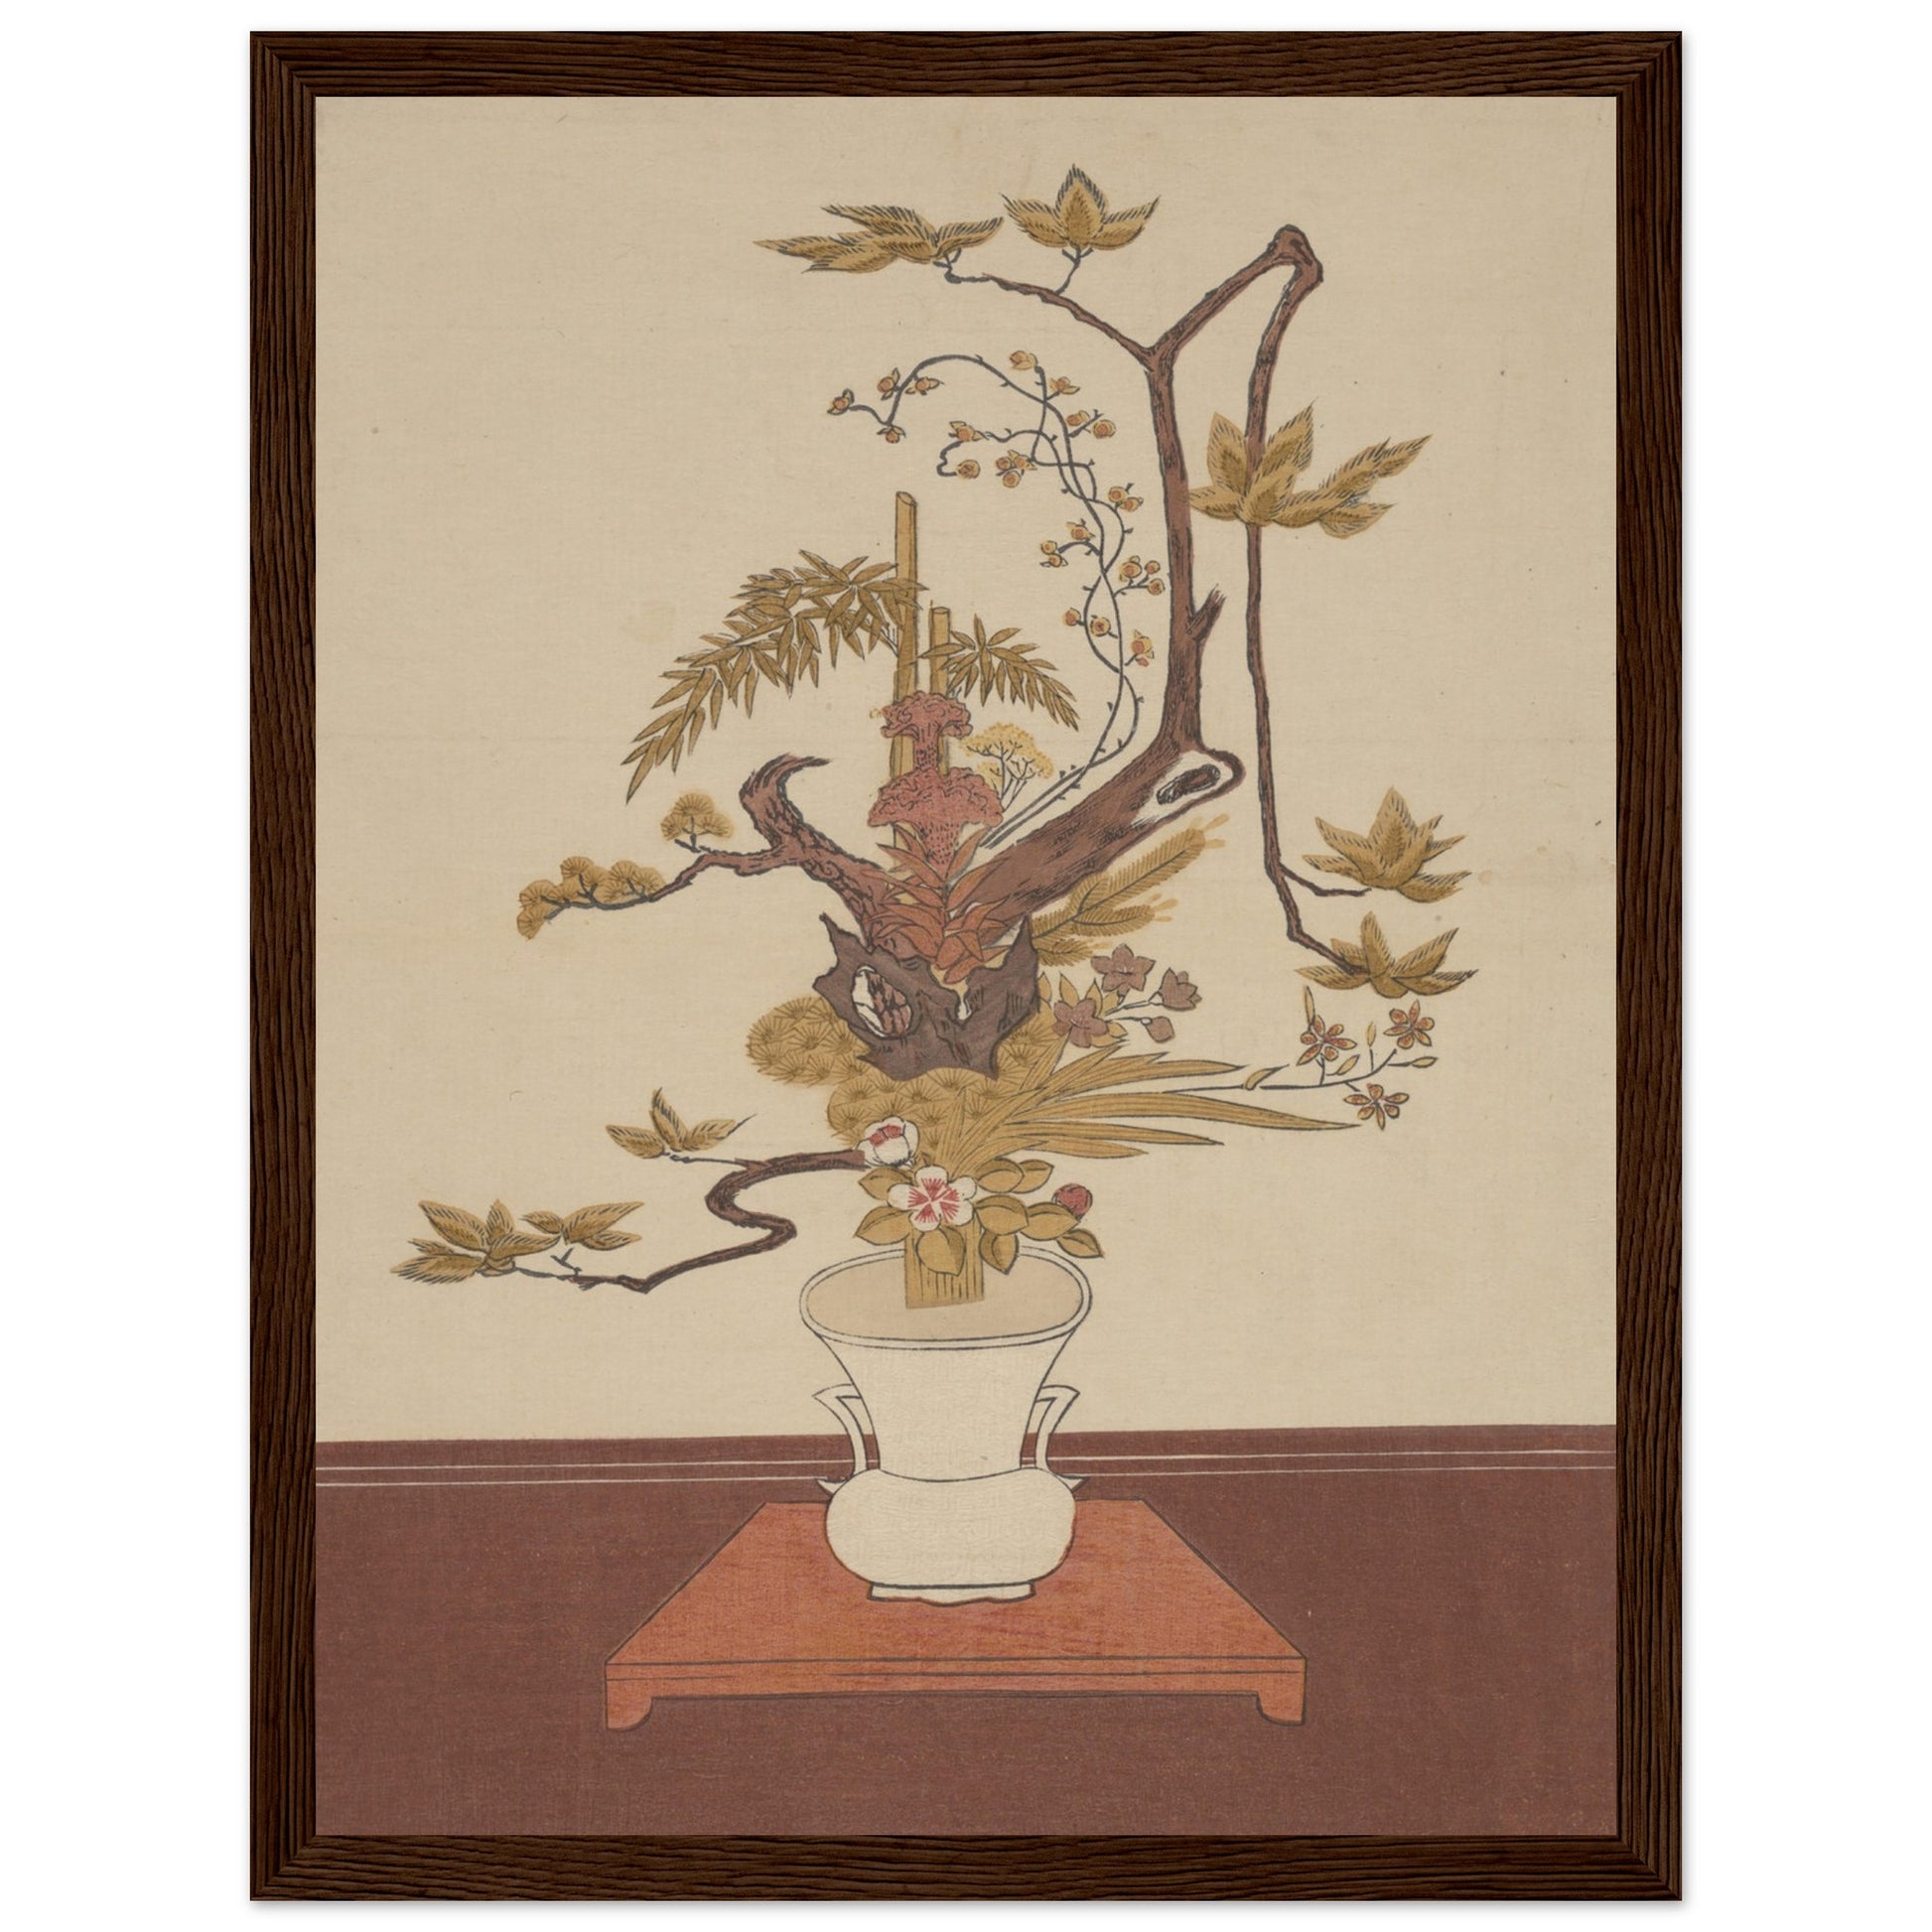 Ike Bana (Flower Arrangement) art print dark wood frame | By Print Room Ltd